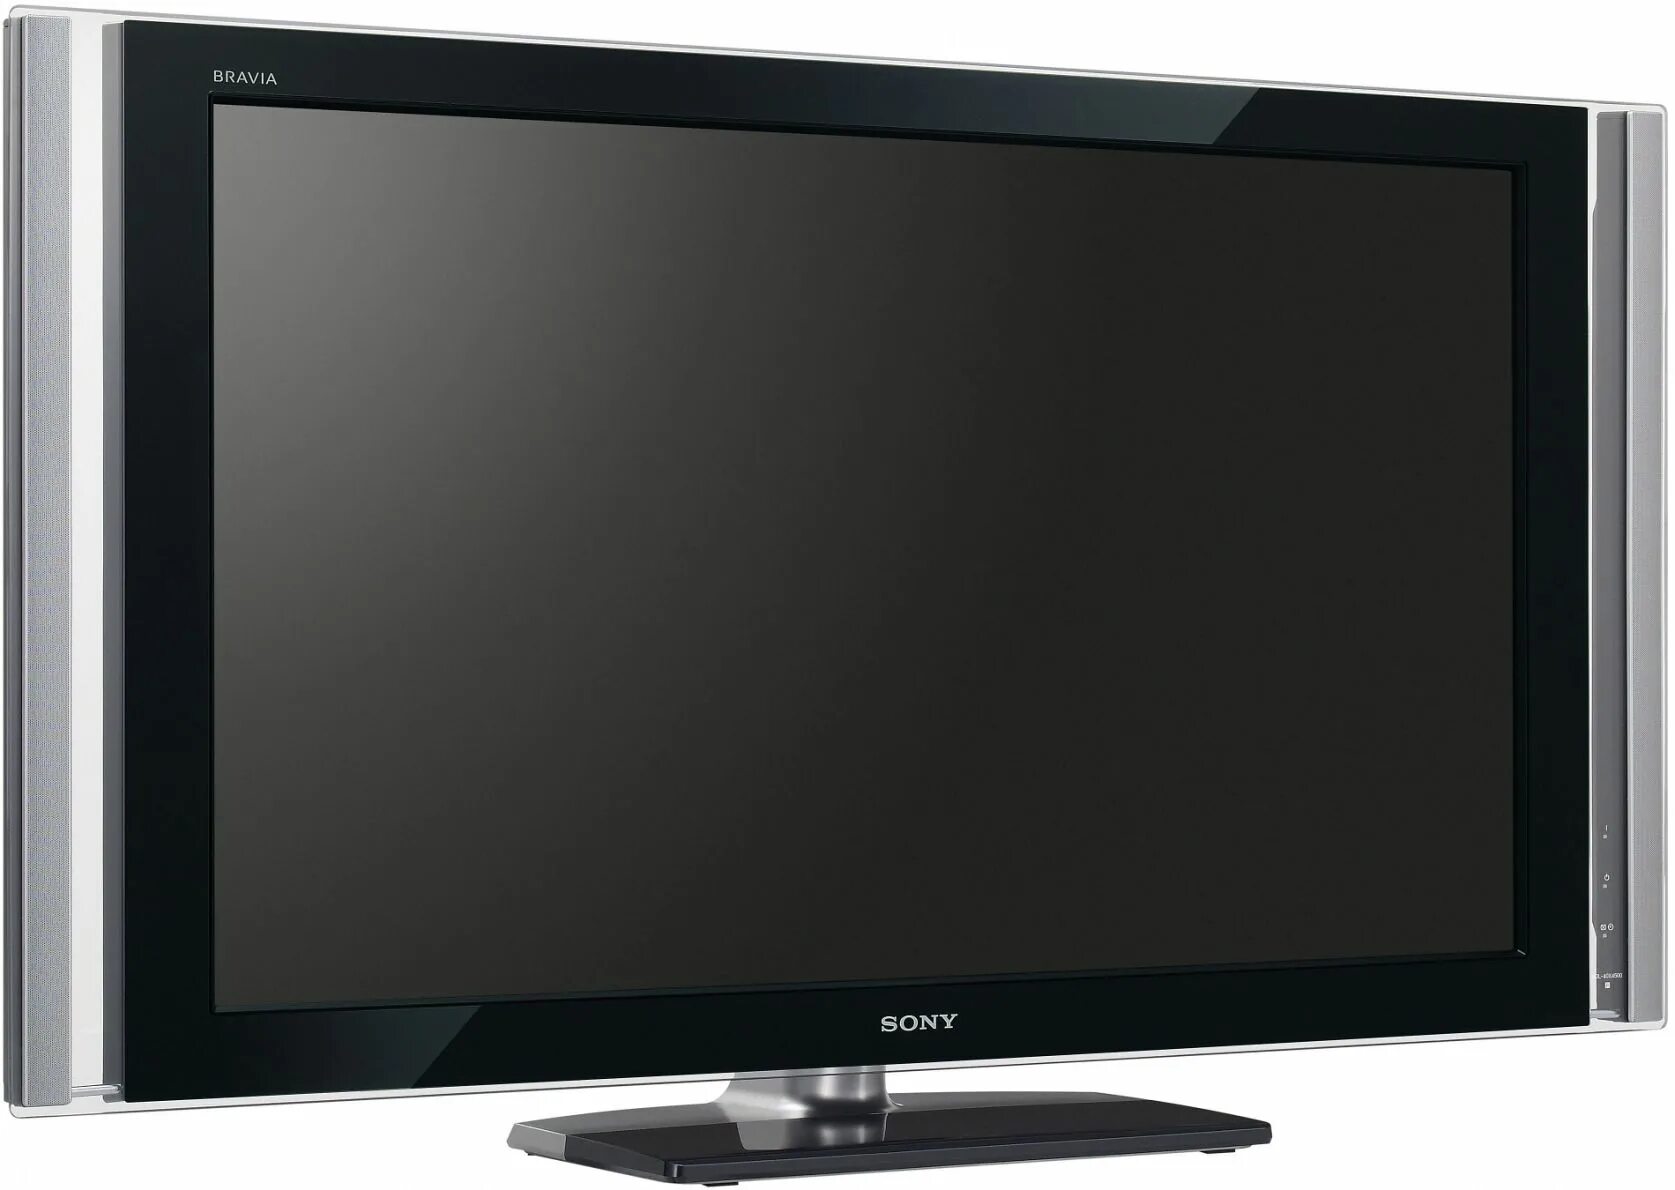 Купить телевизор в нижнекамске. Телевизор Sony Bravia KLV-26nx400. Телевизор Sony KLV-26nx400 26". KDL 40x4500. Sony 26nx400.